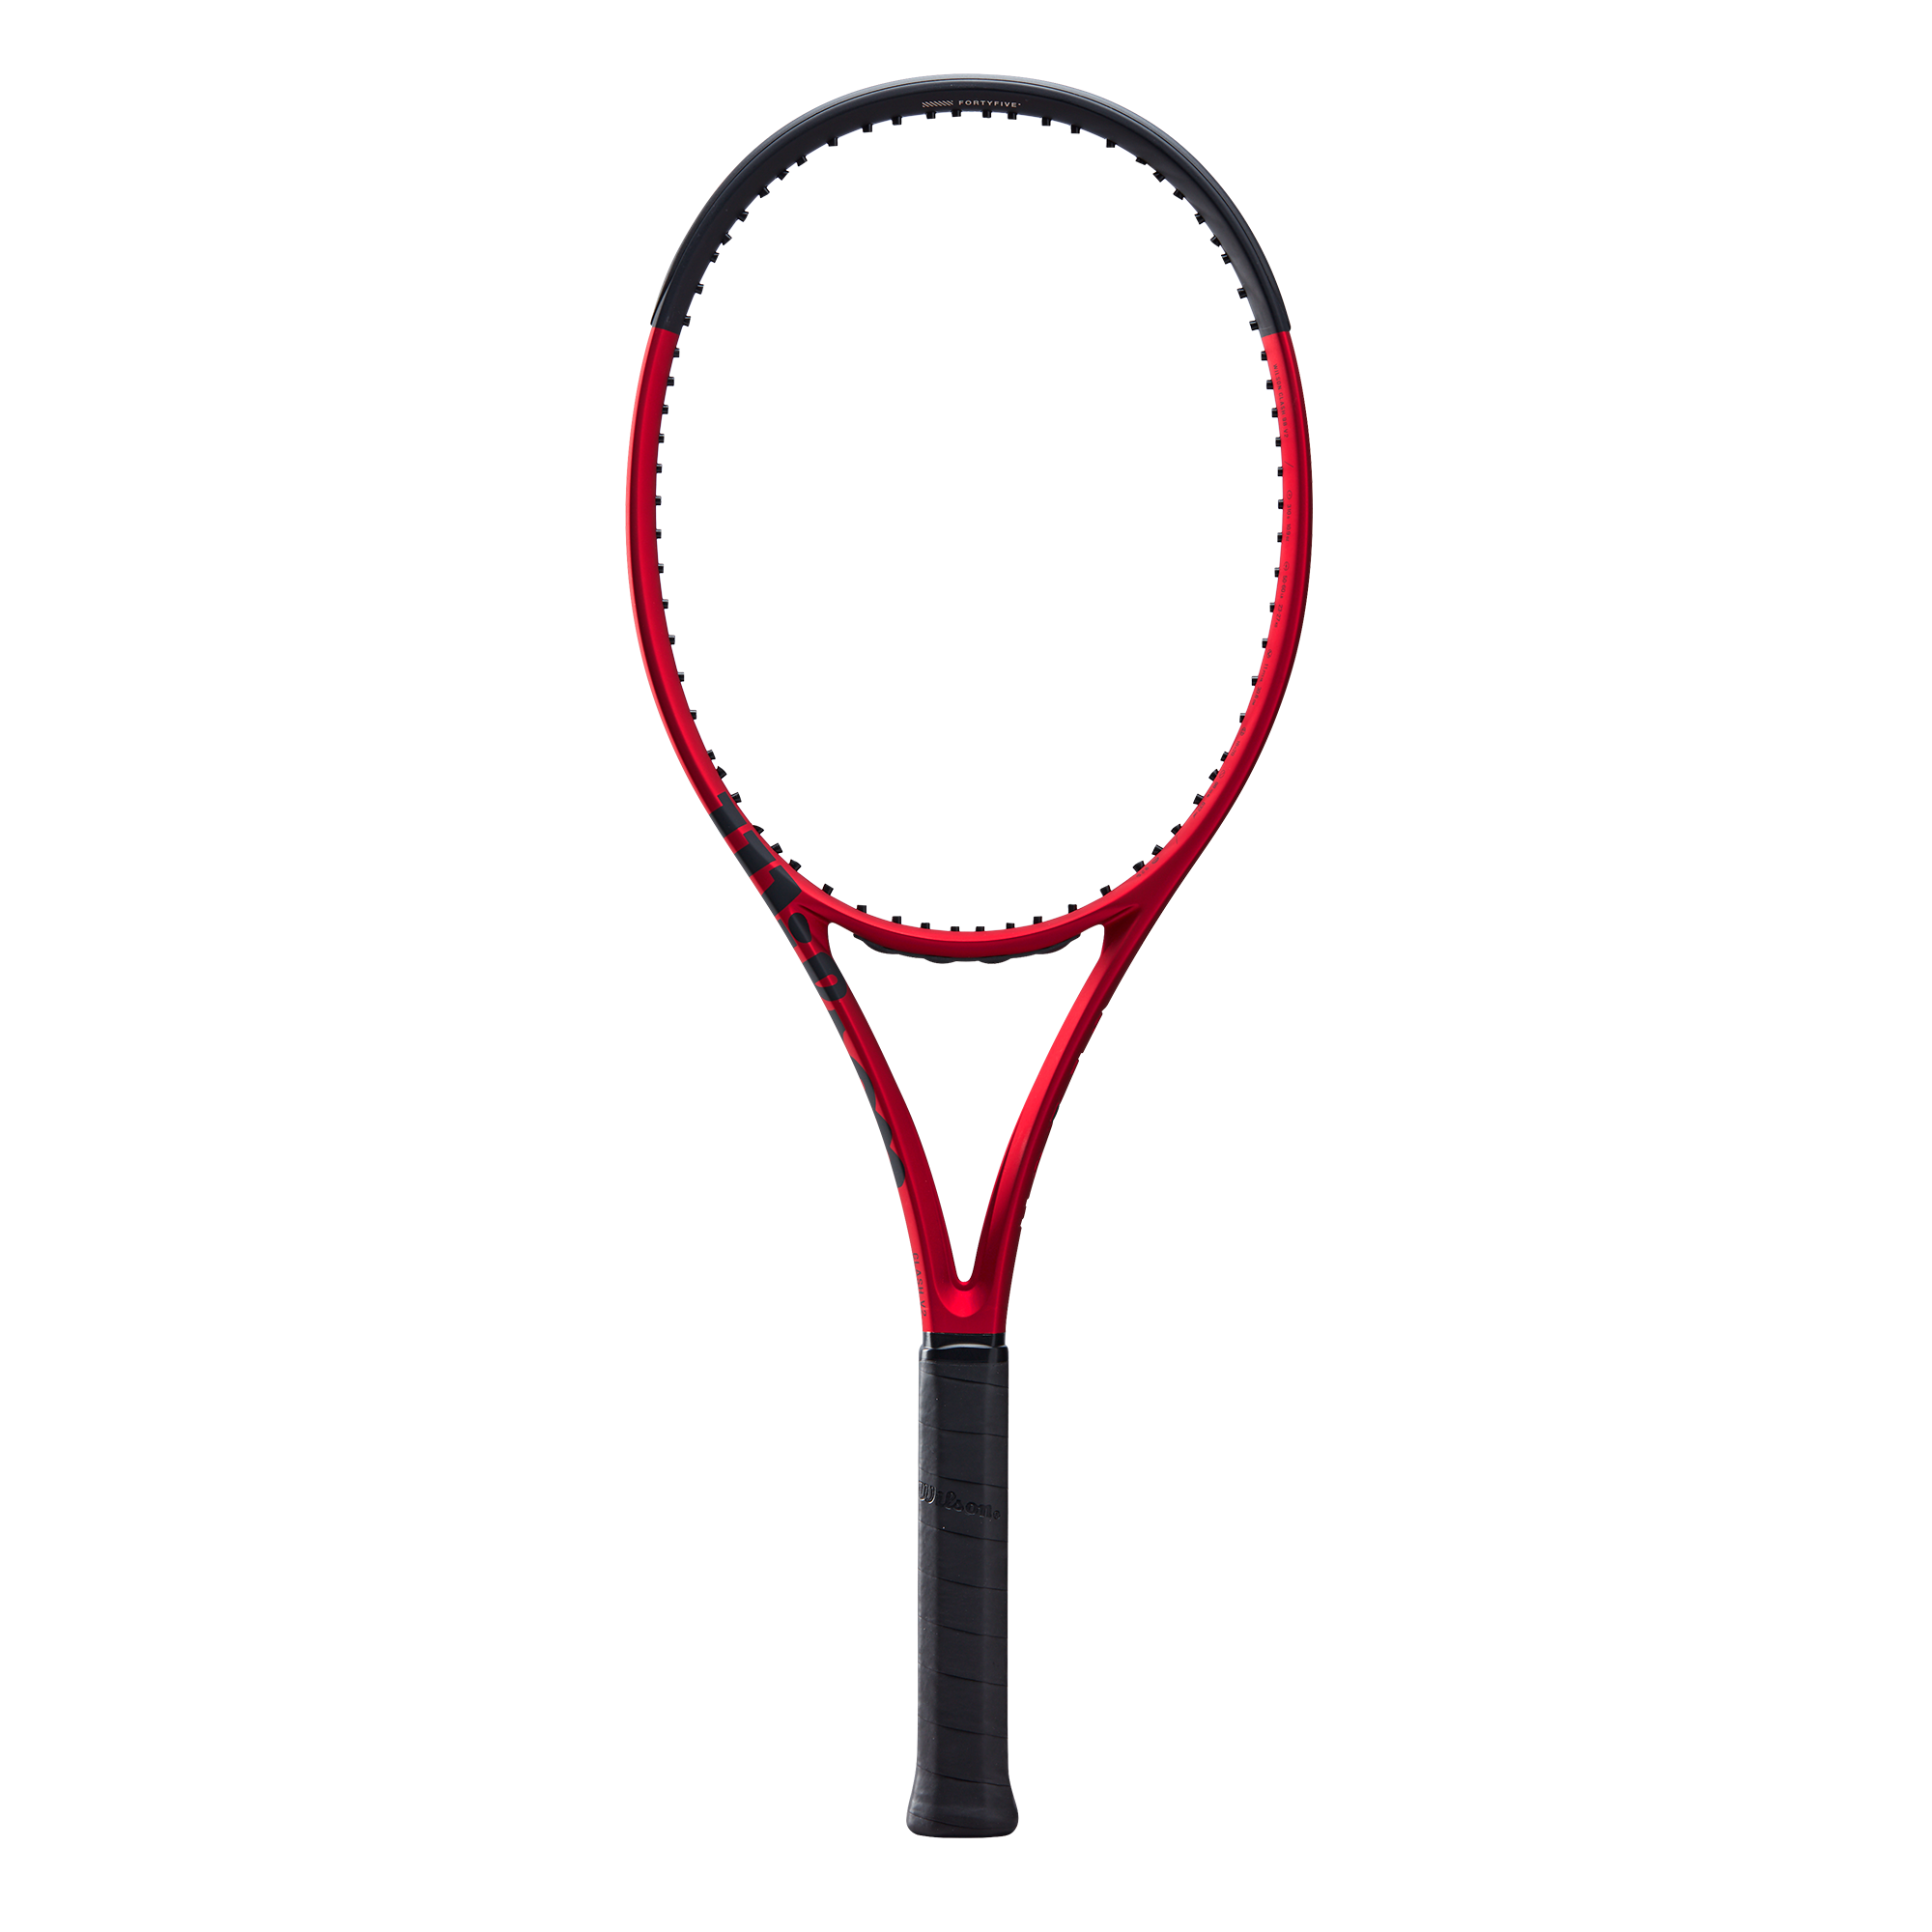 Wilson Clash 98 V2 Tennis Racket